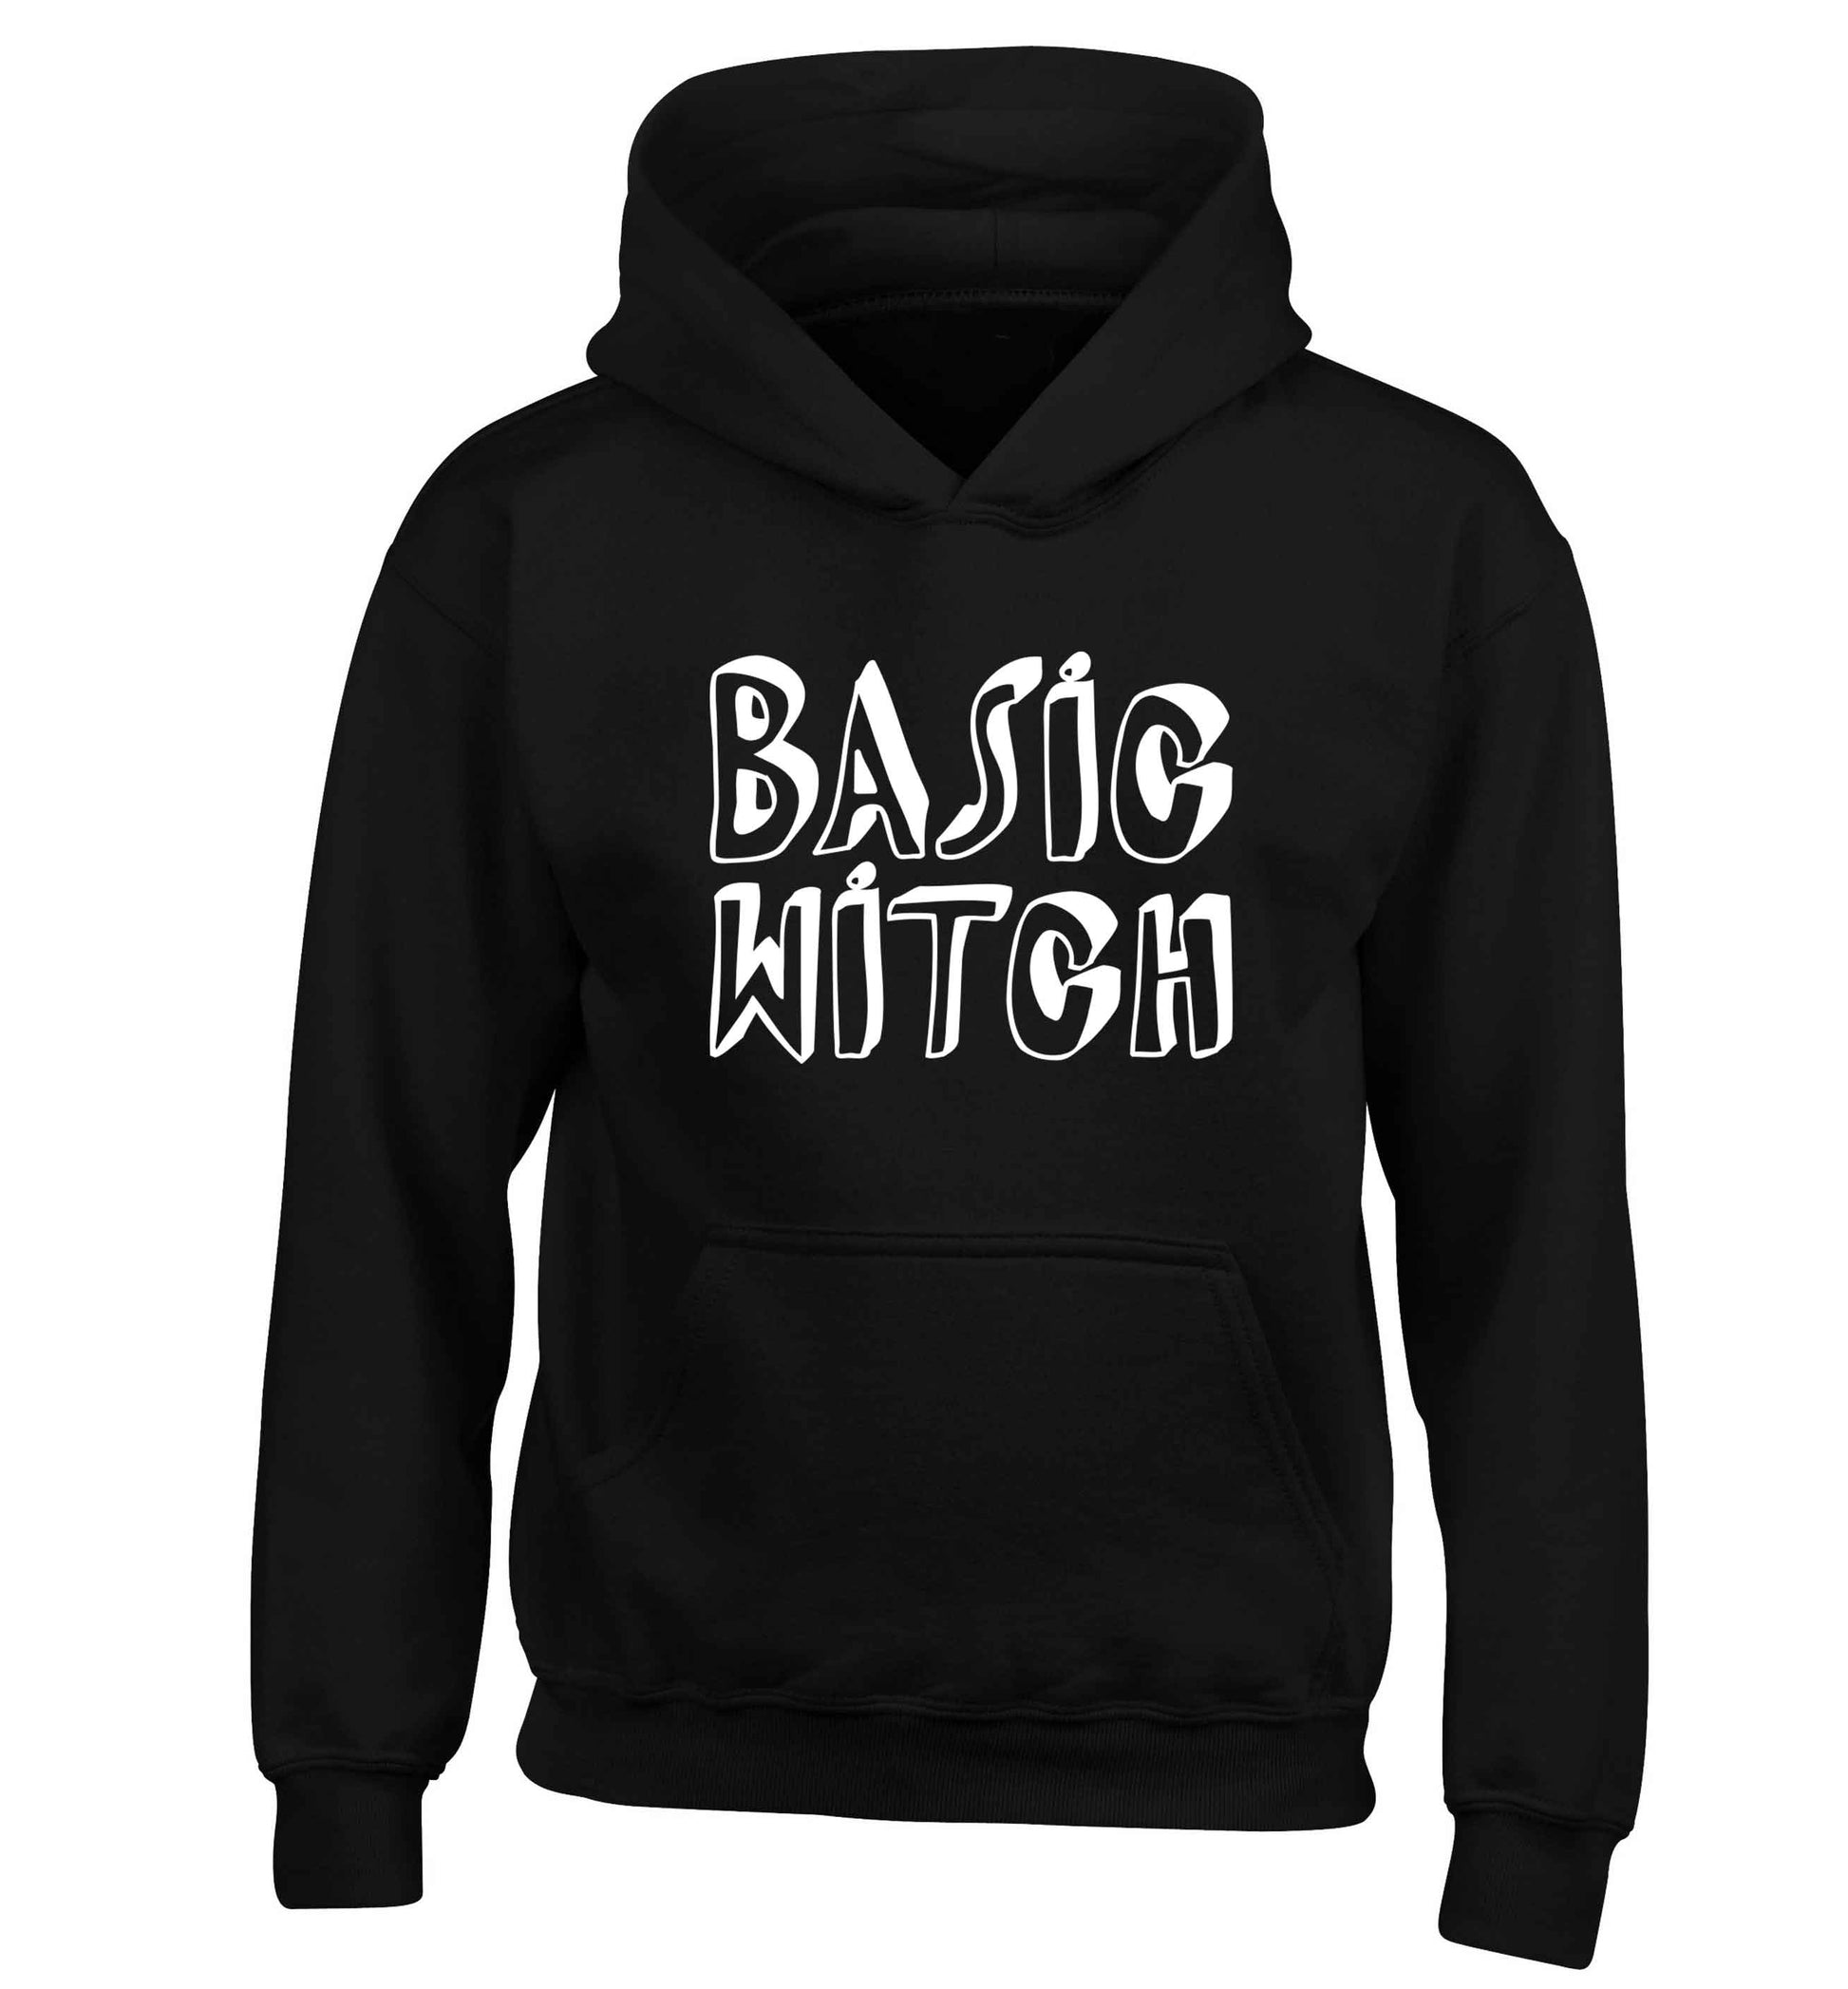 Basic witch children's black hoodie 12-13 Years